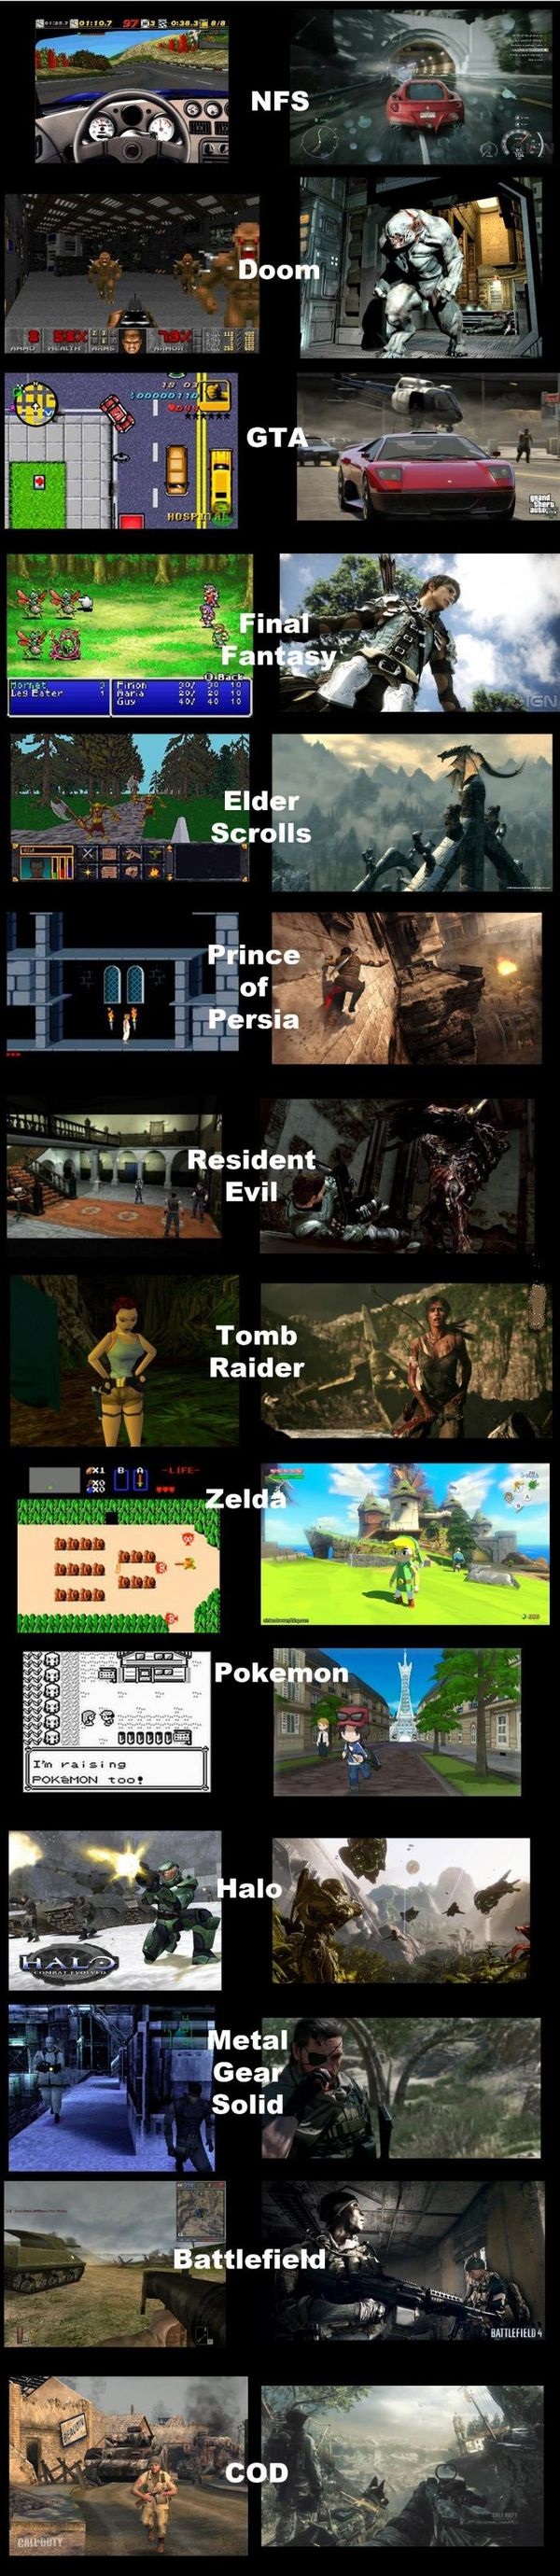 video game graphics evolution